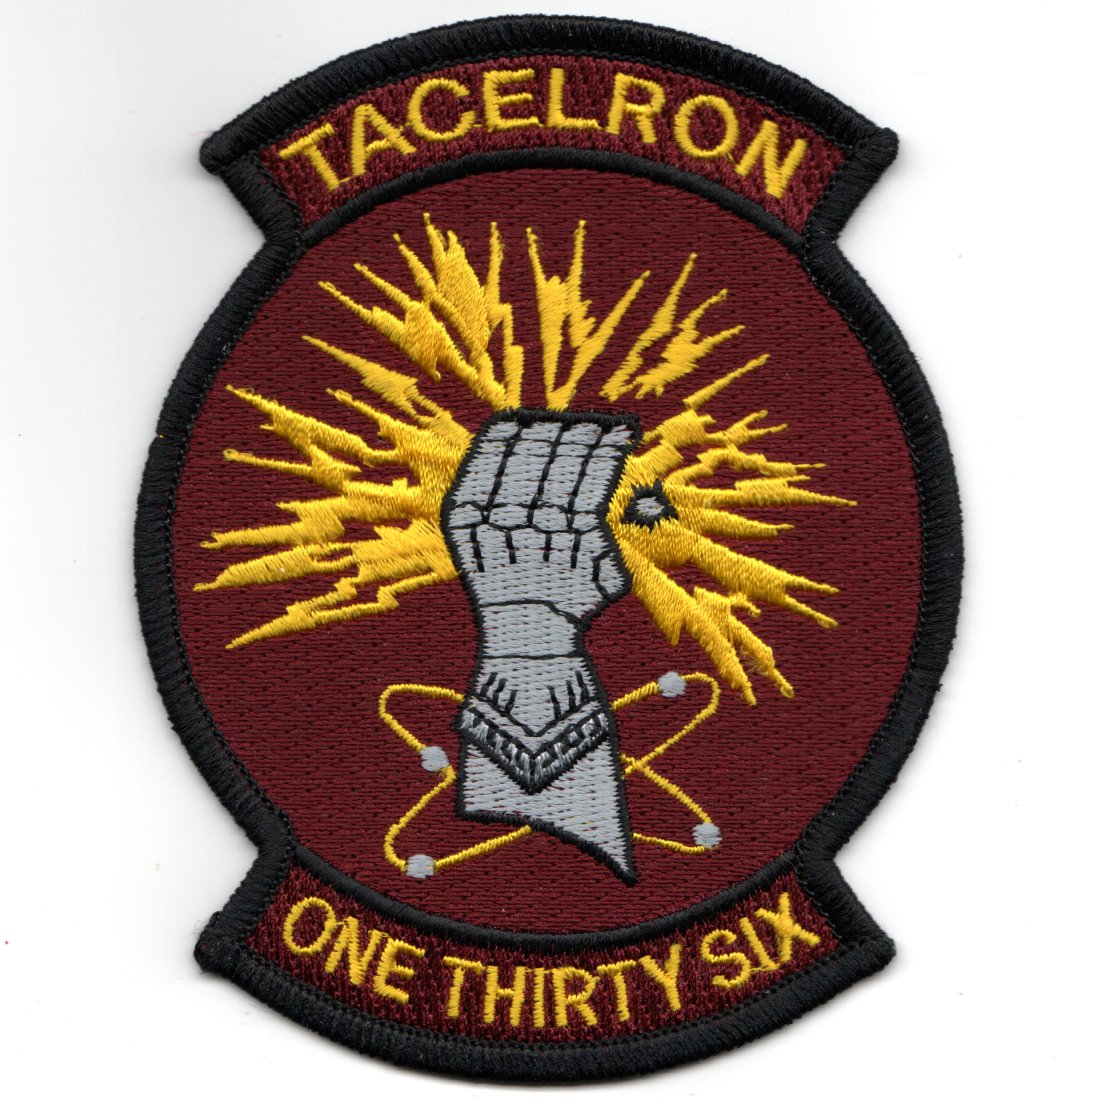 VAQ-136 'TACELRON' Squadron Patch (Maroon)